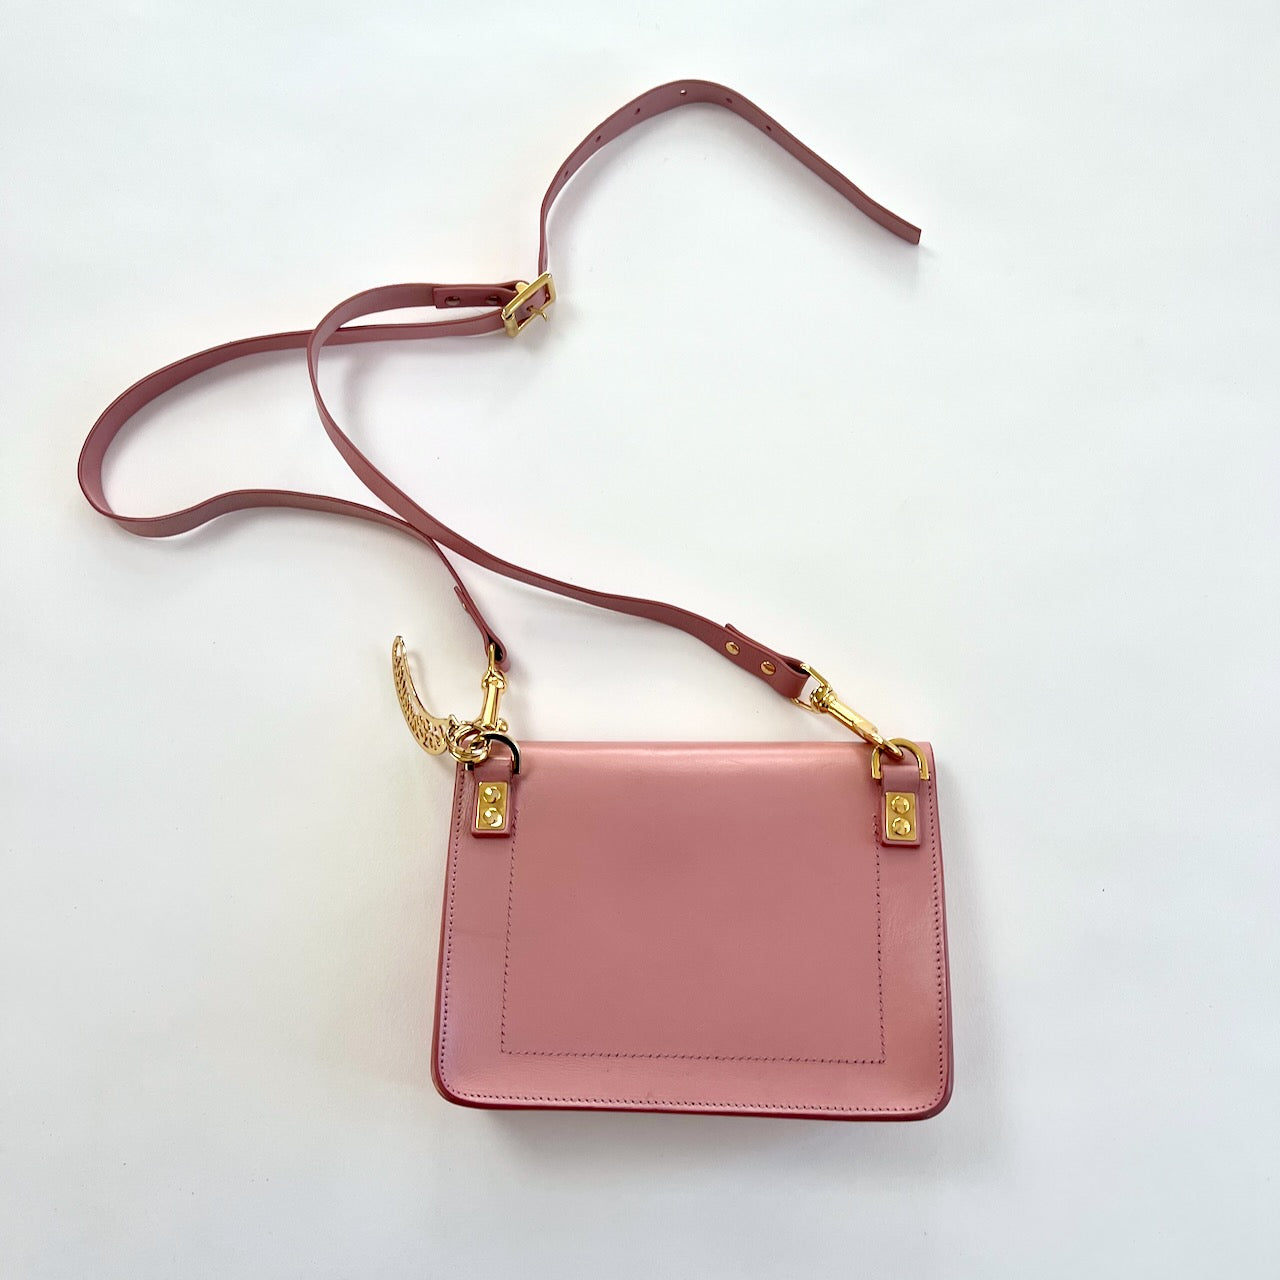 Sophie Hulme 'Milner mini' pink leather cross body bag